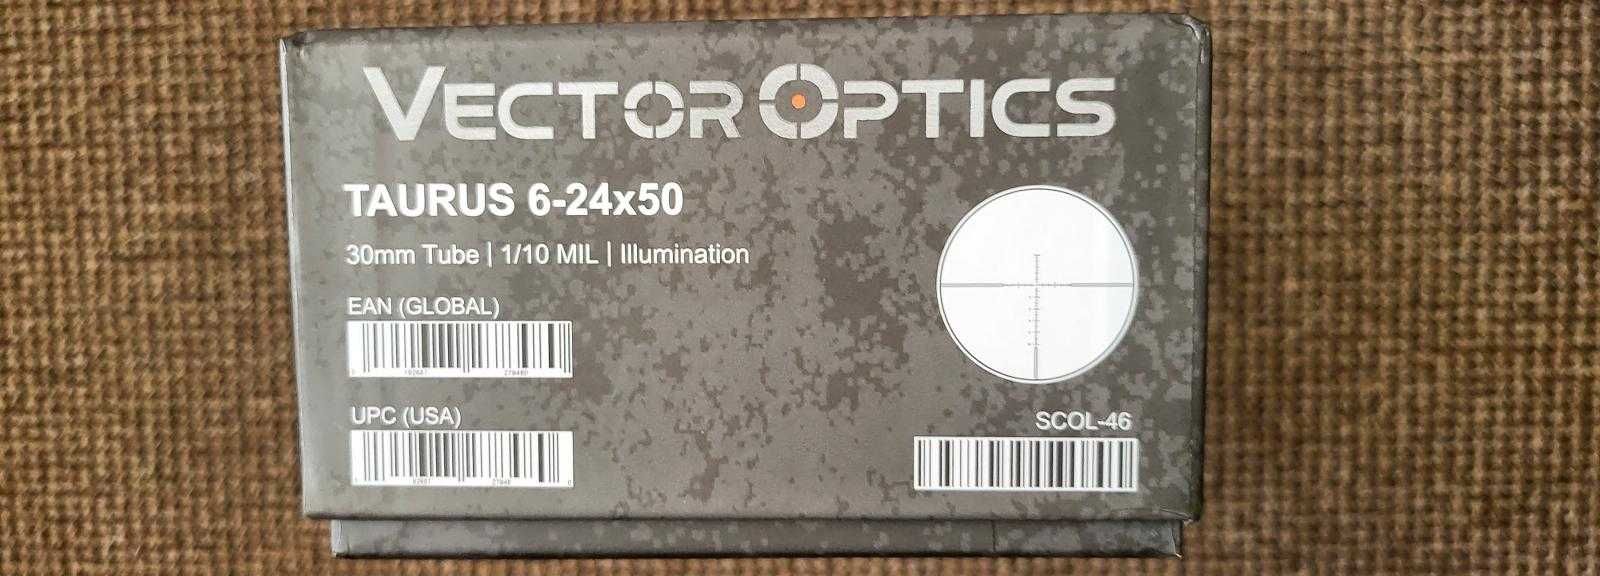 Luneta Vector Optics Taurus 6-24x50 (Nowa)